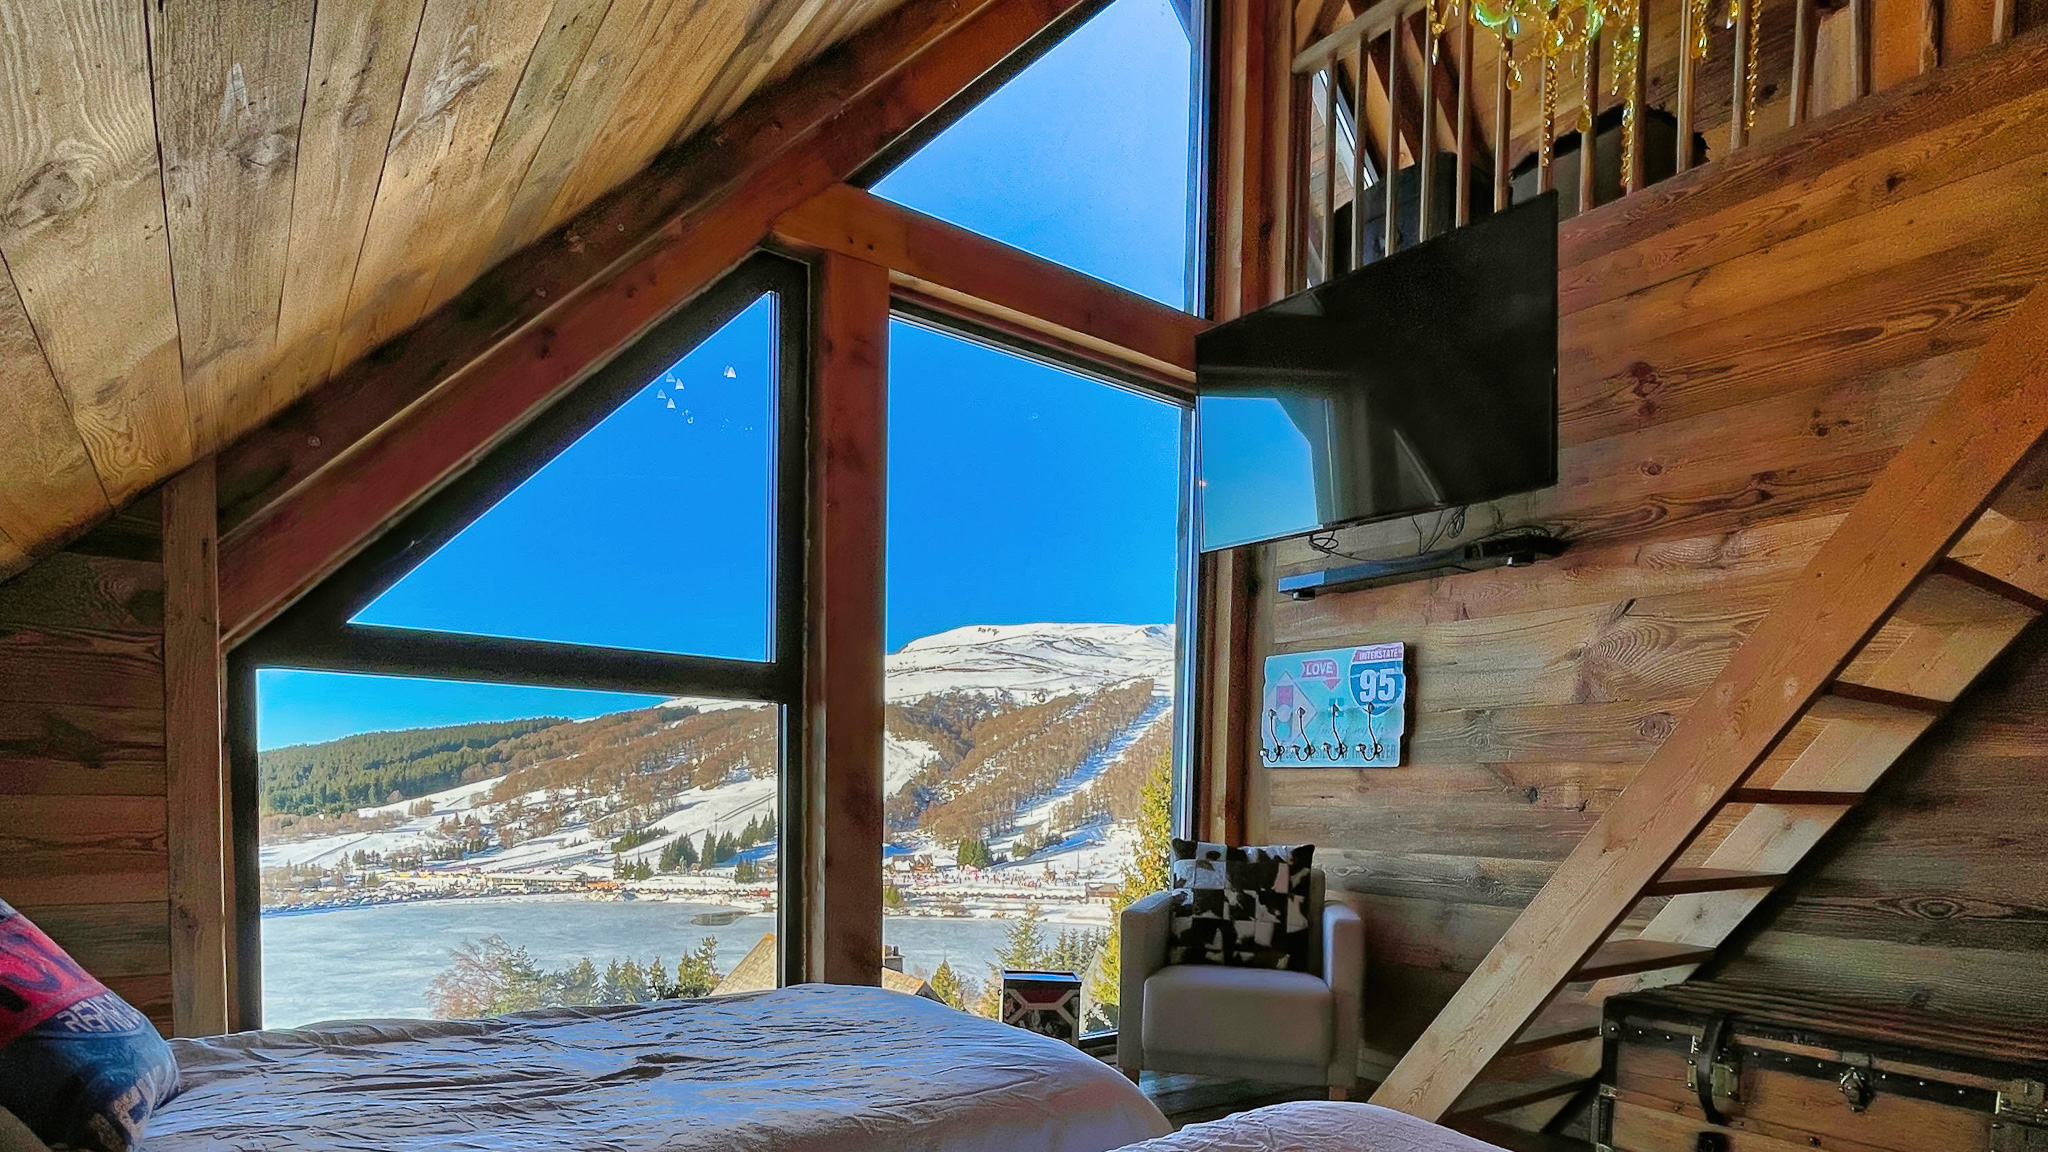 Chalet l'Anorak Super Besse, Room overlooking the ski slopes of Super Besse